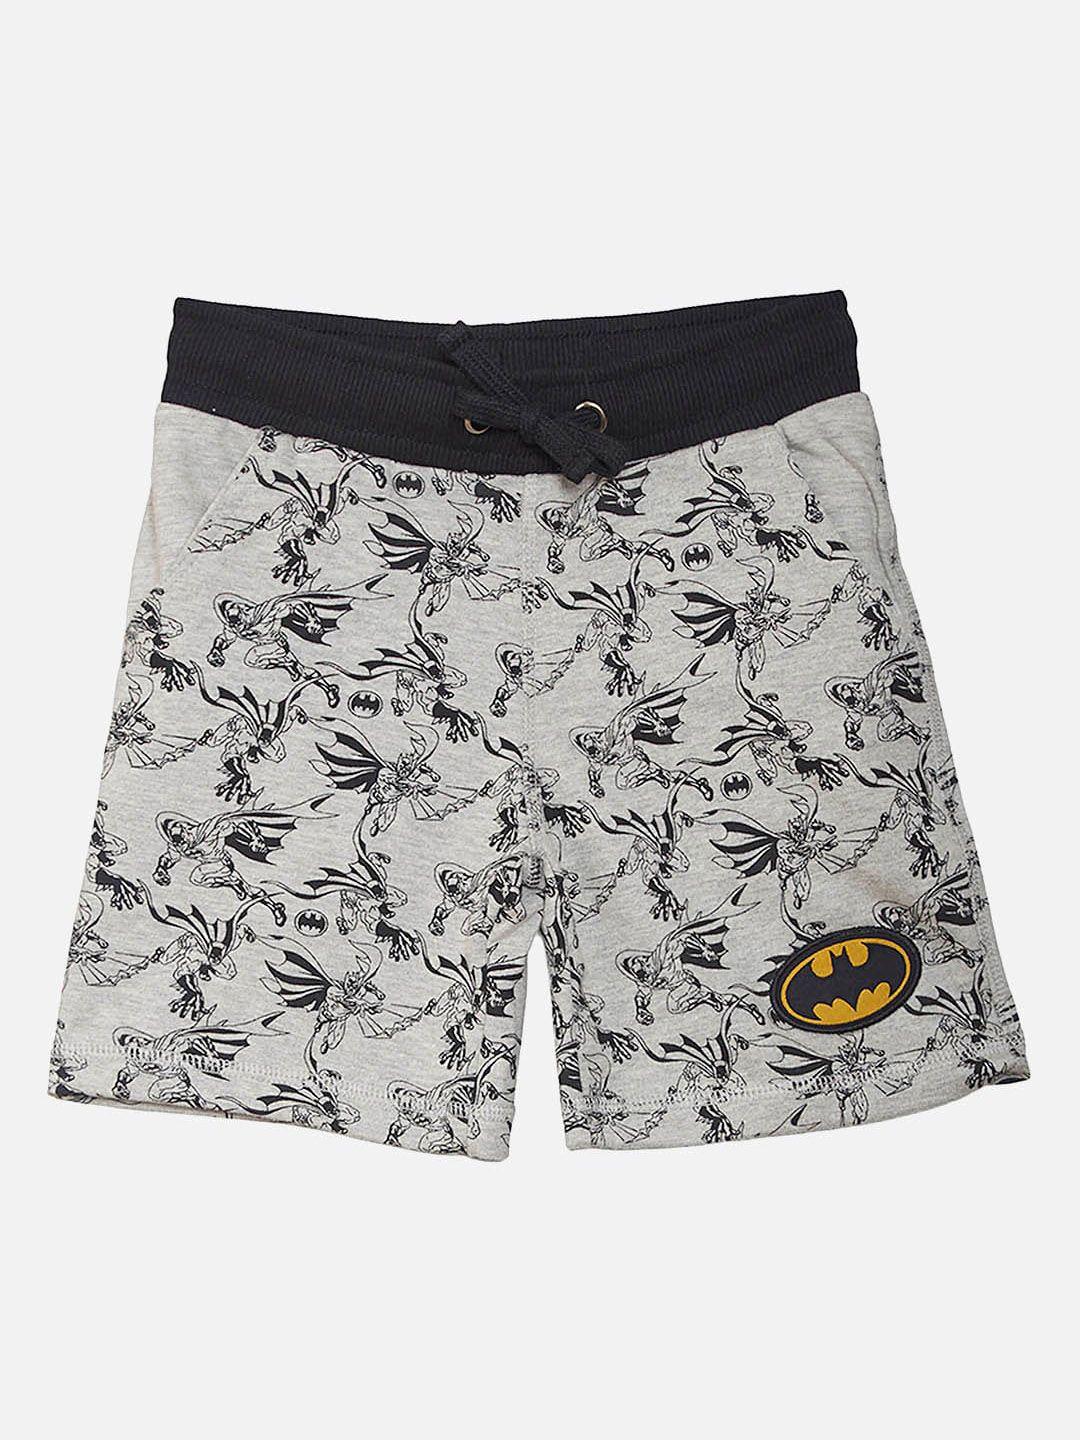 Kids Ville Boys Batman Printed Cotton Shorts